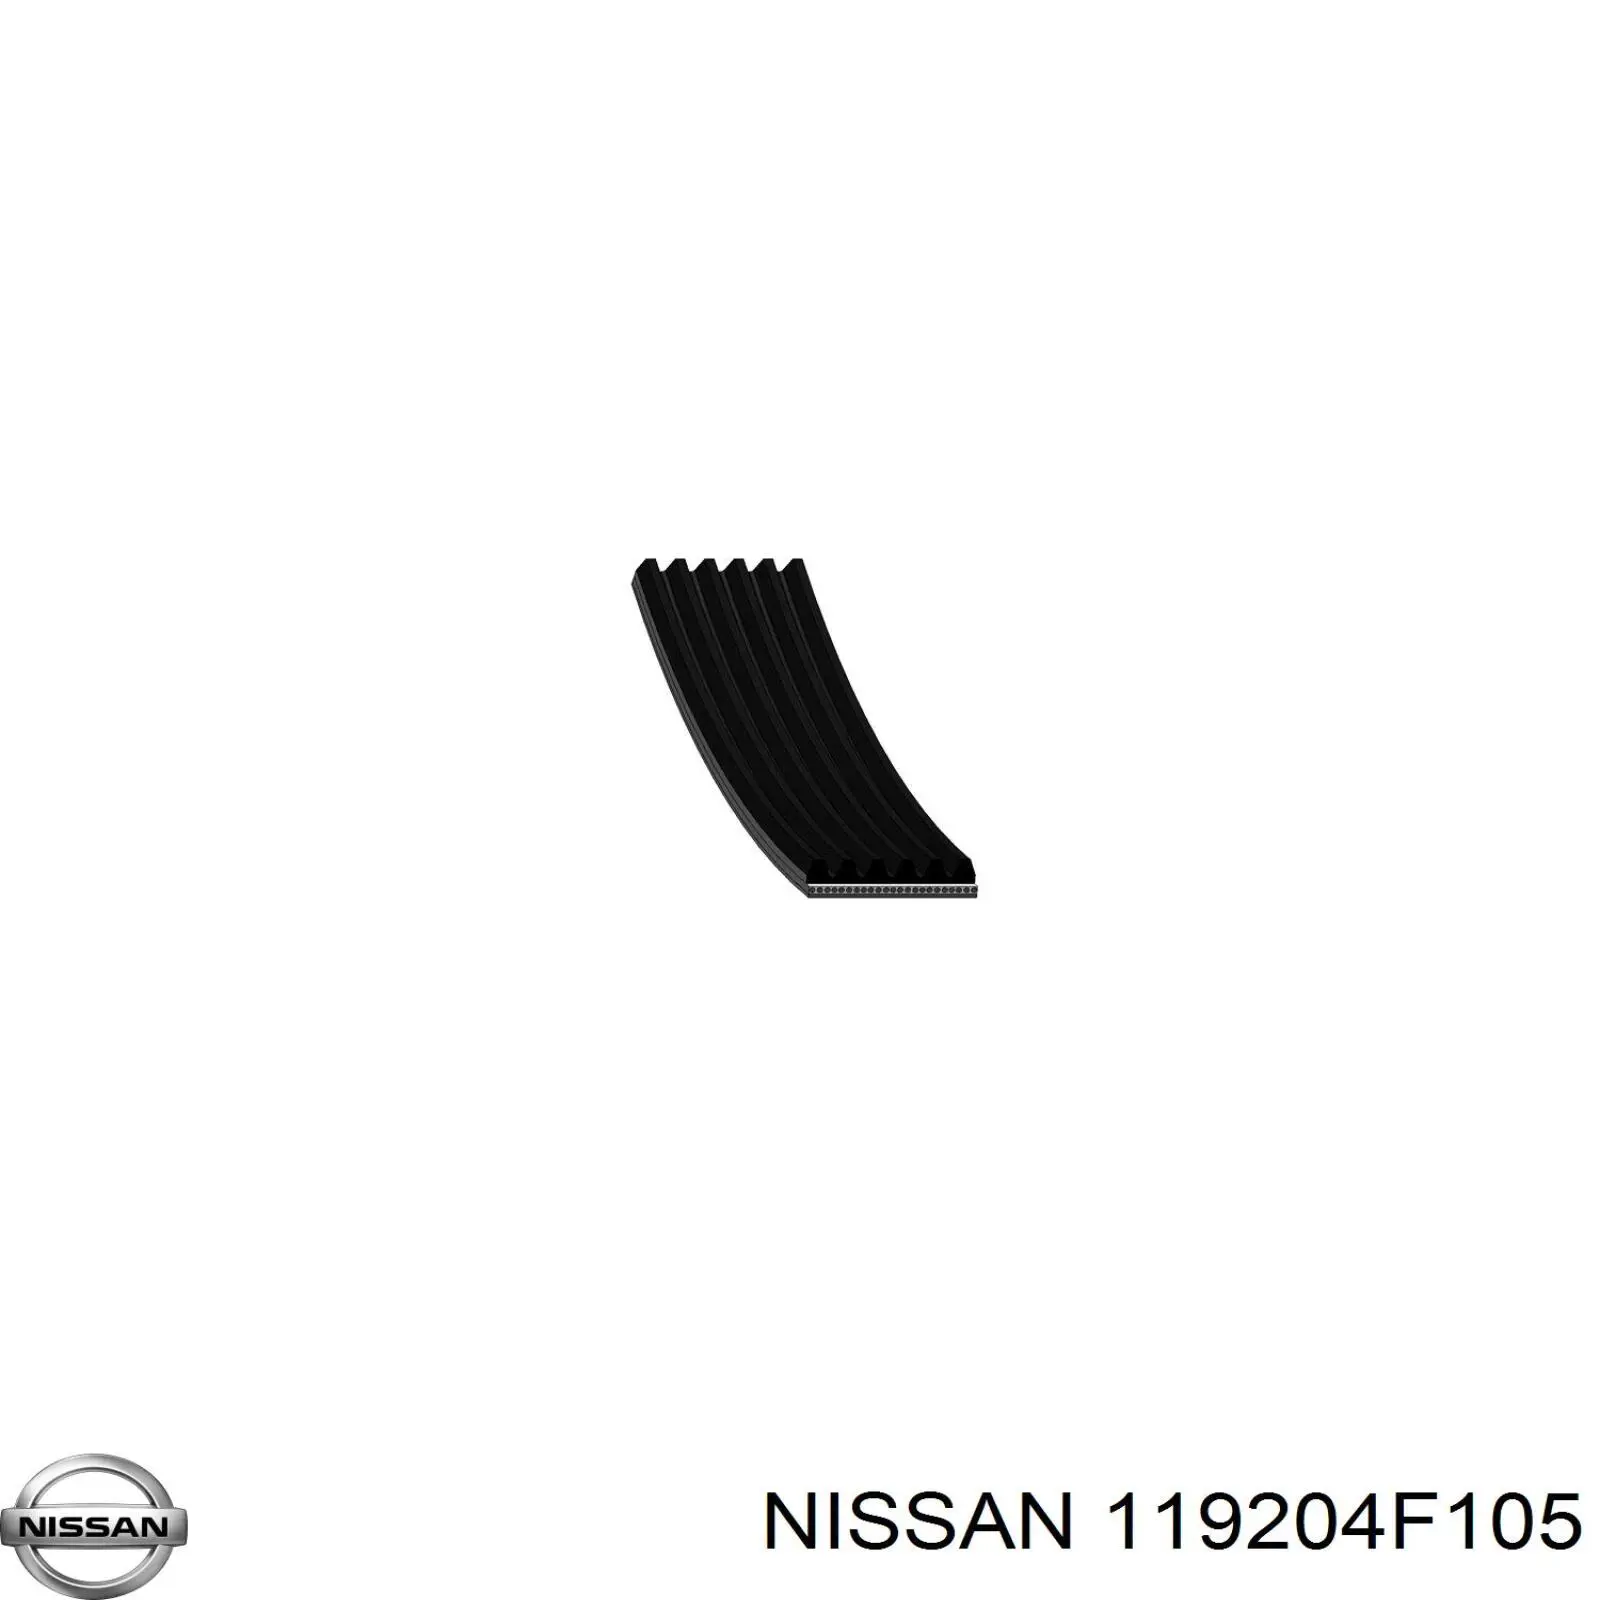 119204F105 Nissan correa trapezoidal